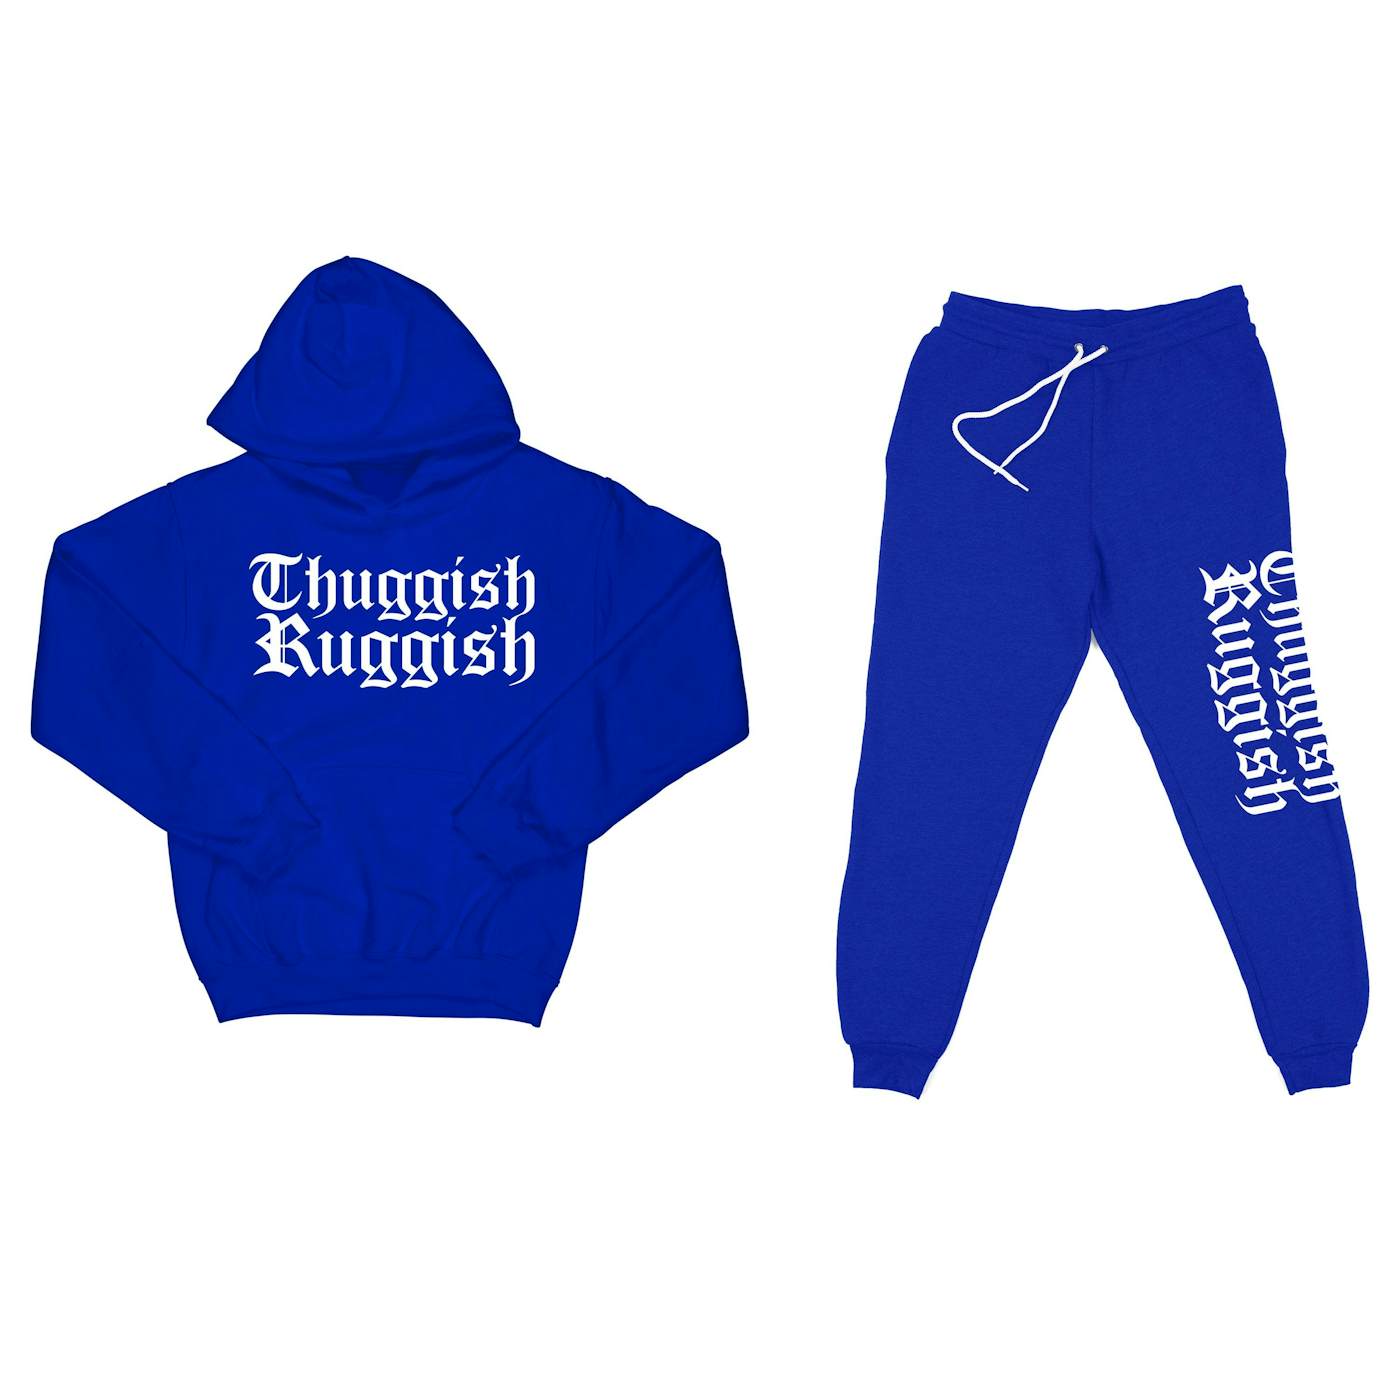 Bone Thugs-N-Harmony Thuggish Ruggish Sweat Suit